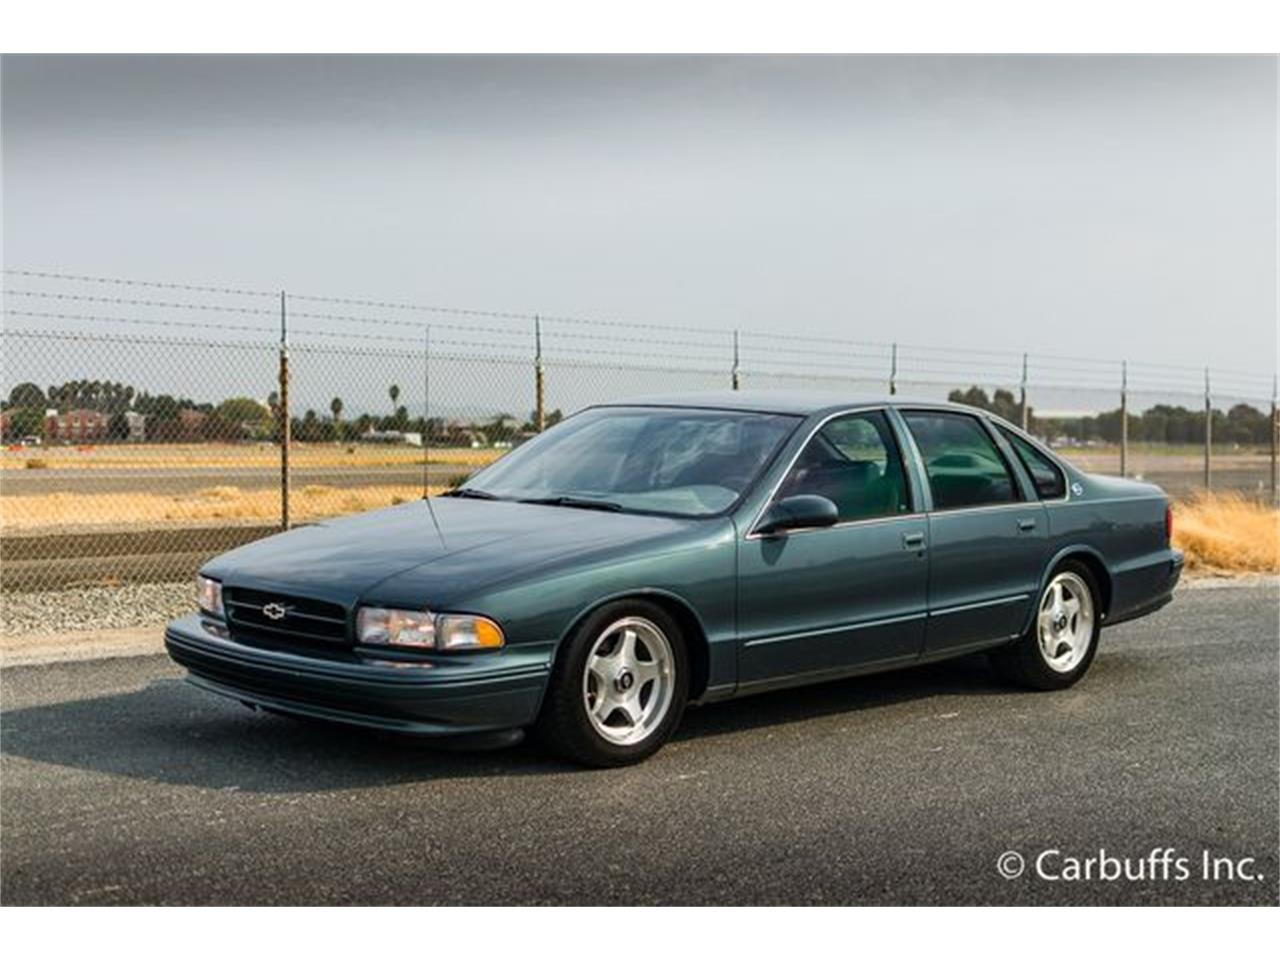 For Sale: 1996 Chevrolet Impala SS in Concord, California.